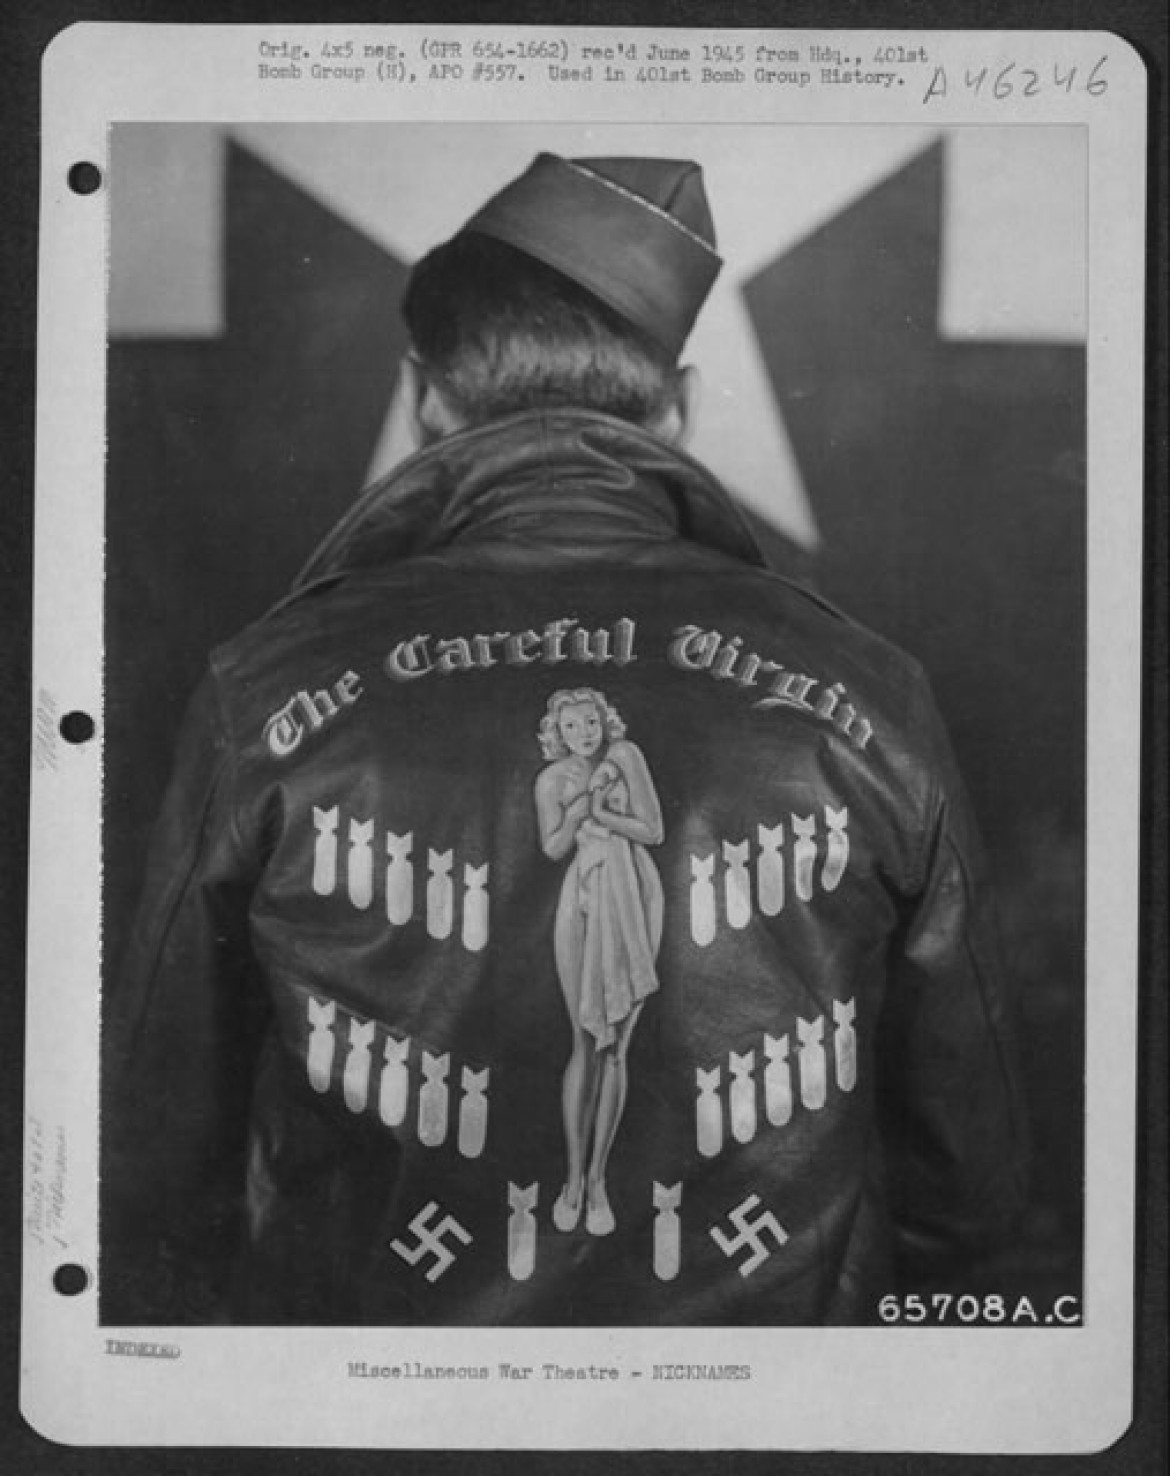 Kurtki załóg bombowców / Bomber Jackets series, 1945 (c) US National Archives and Records Administration